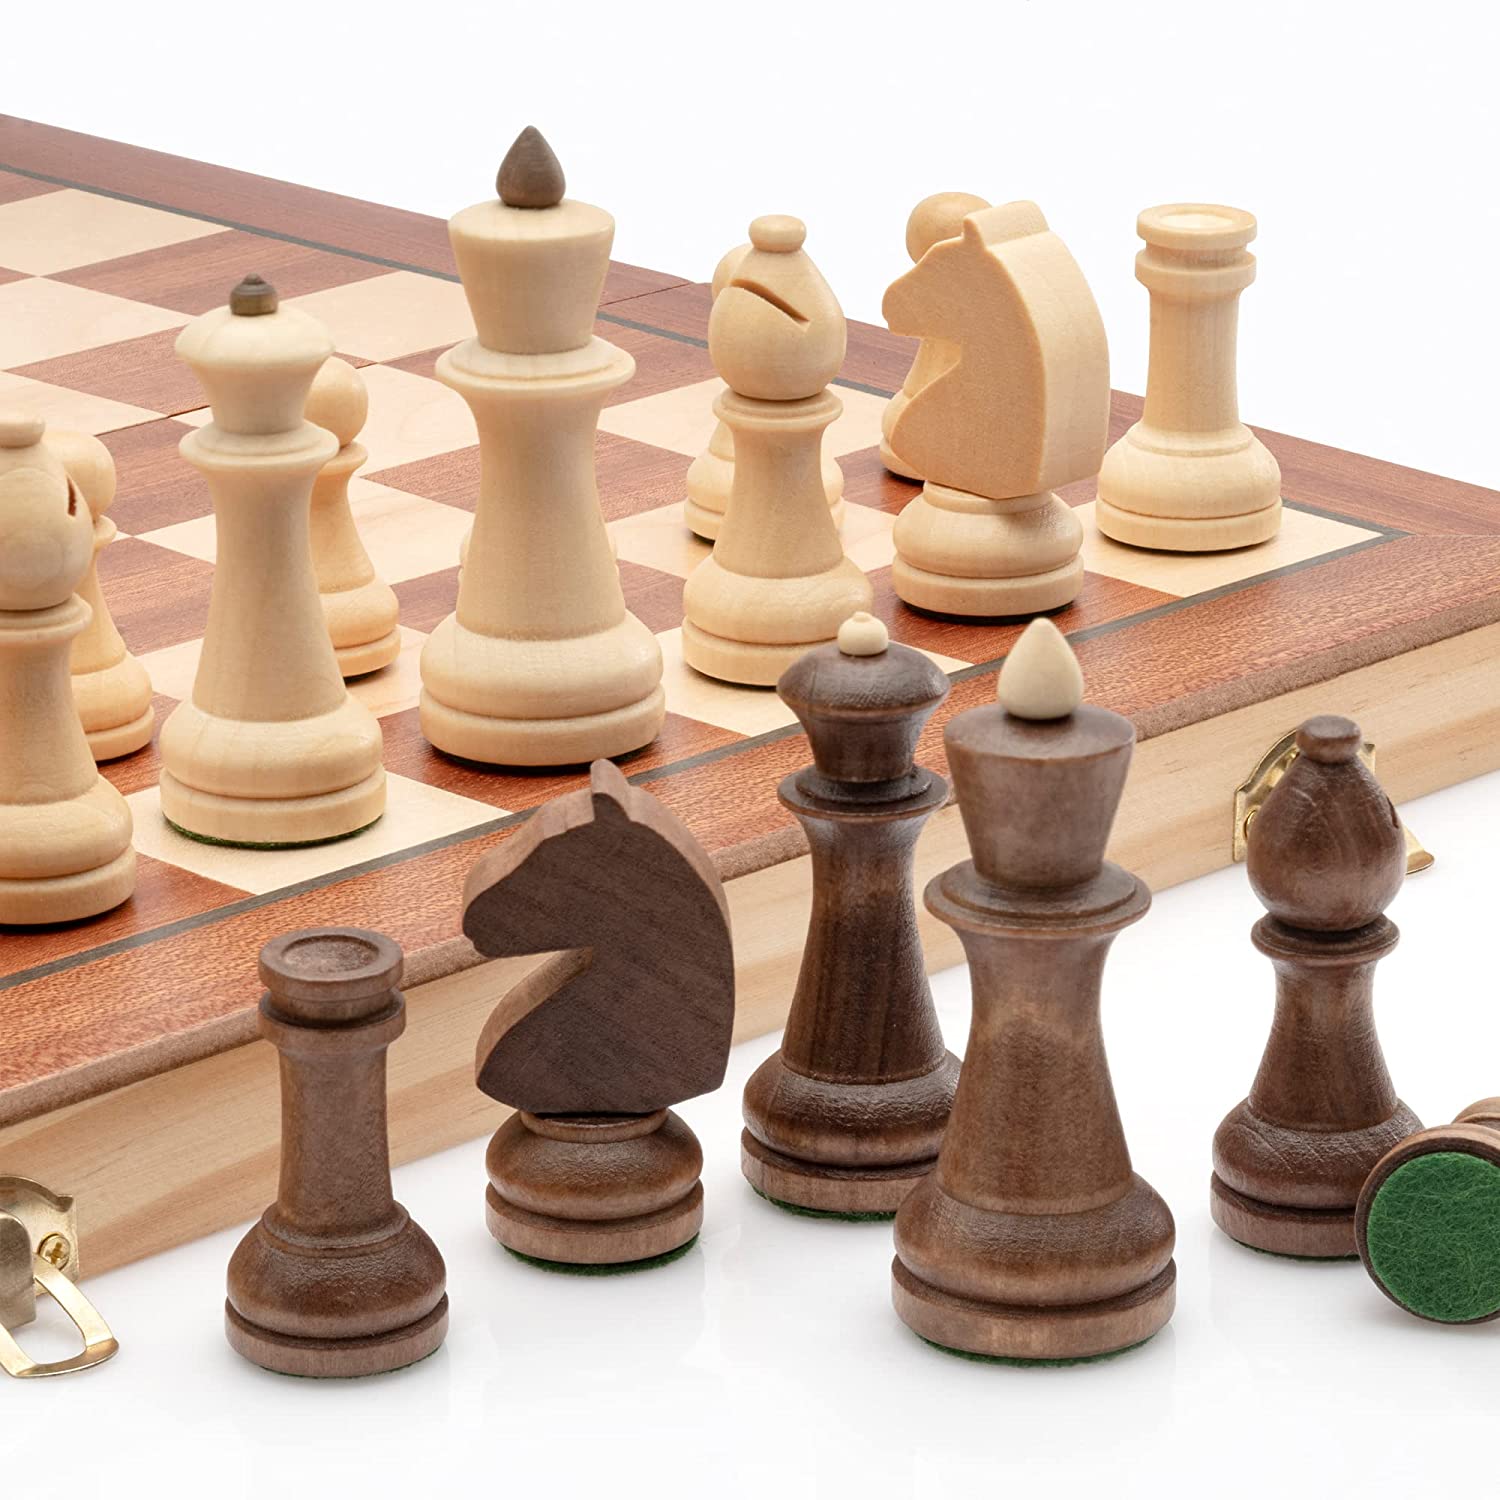 Ver categoría de ajedrez plegable de madera lingle